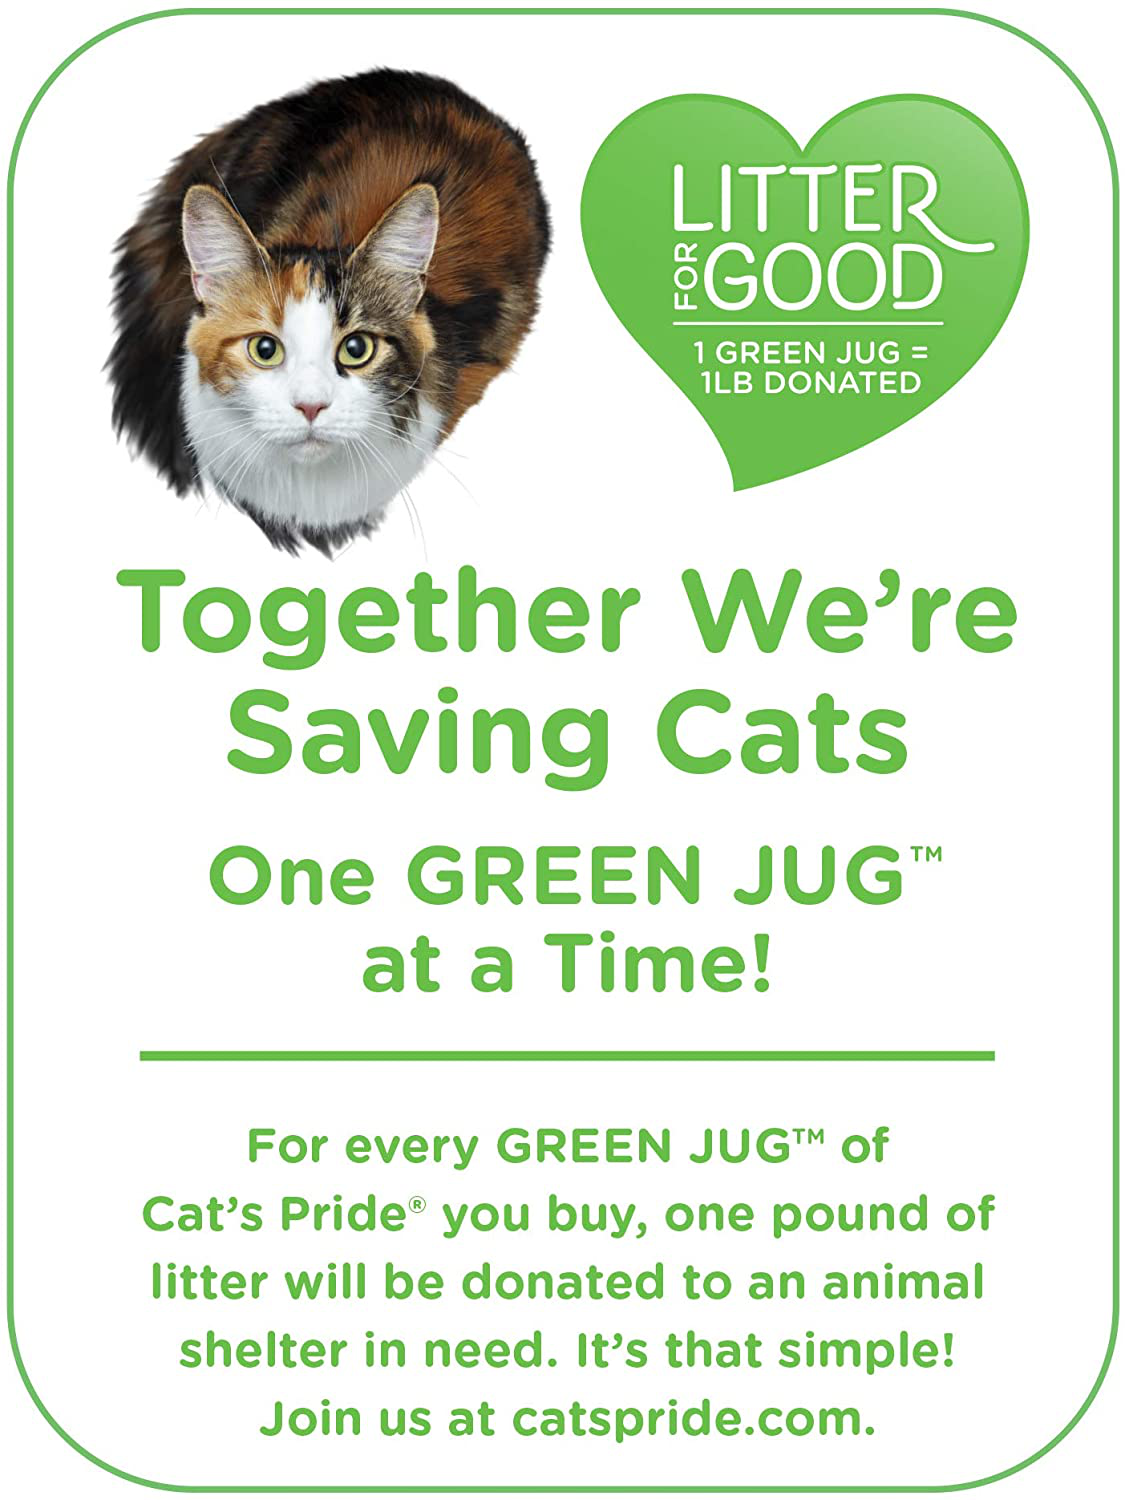 Cat'S Pride Fresh and Light Lightweight Unscented Hypoallergenic Multi-Cat Litter (3 Pack), 30 Lb Jug Animals & Pet Supplies > Pet Supplies > Cat Supplies > Cat Litter Avantree   